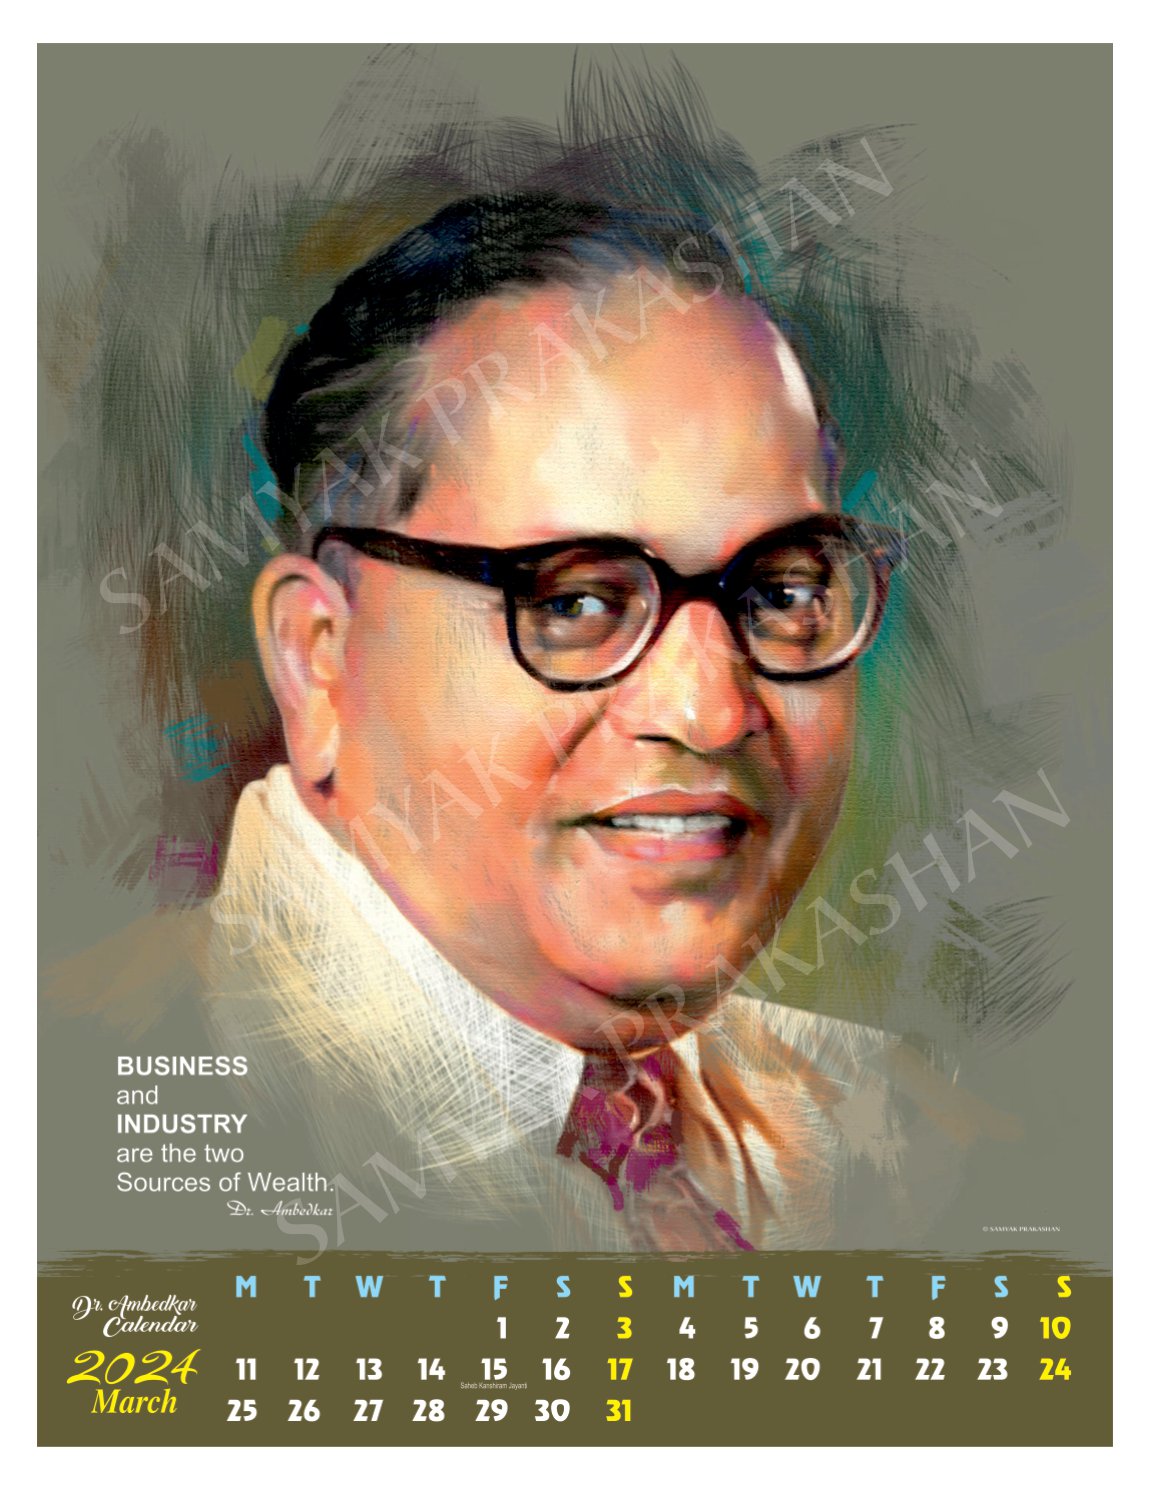 Dr. Ambedkar Calendar 2024